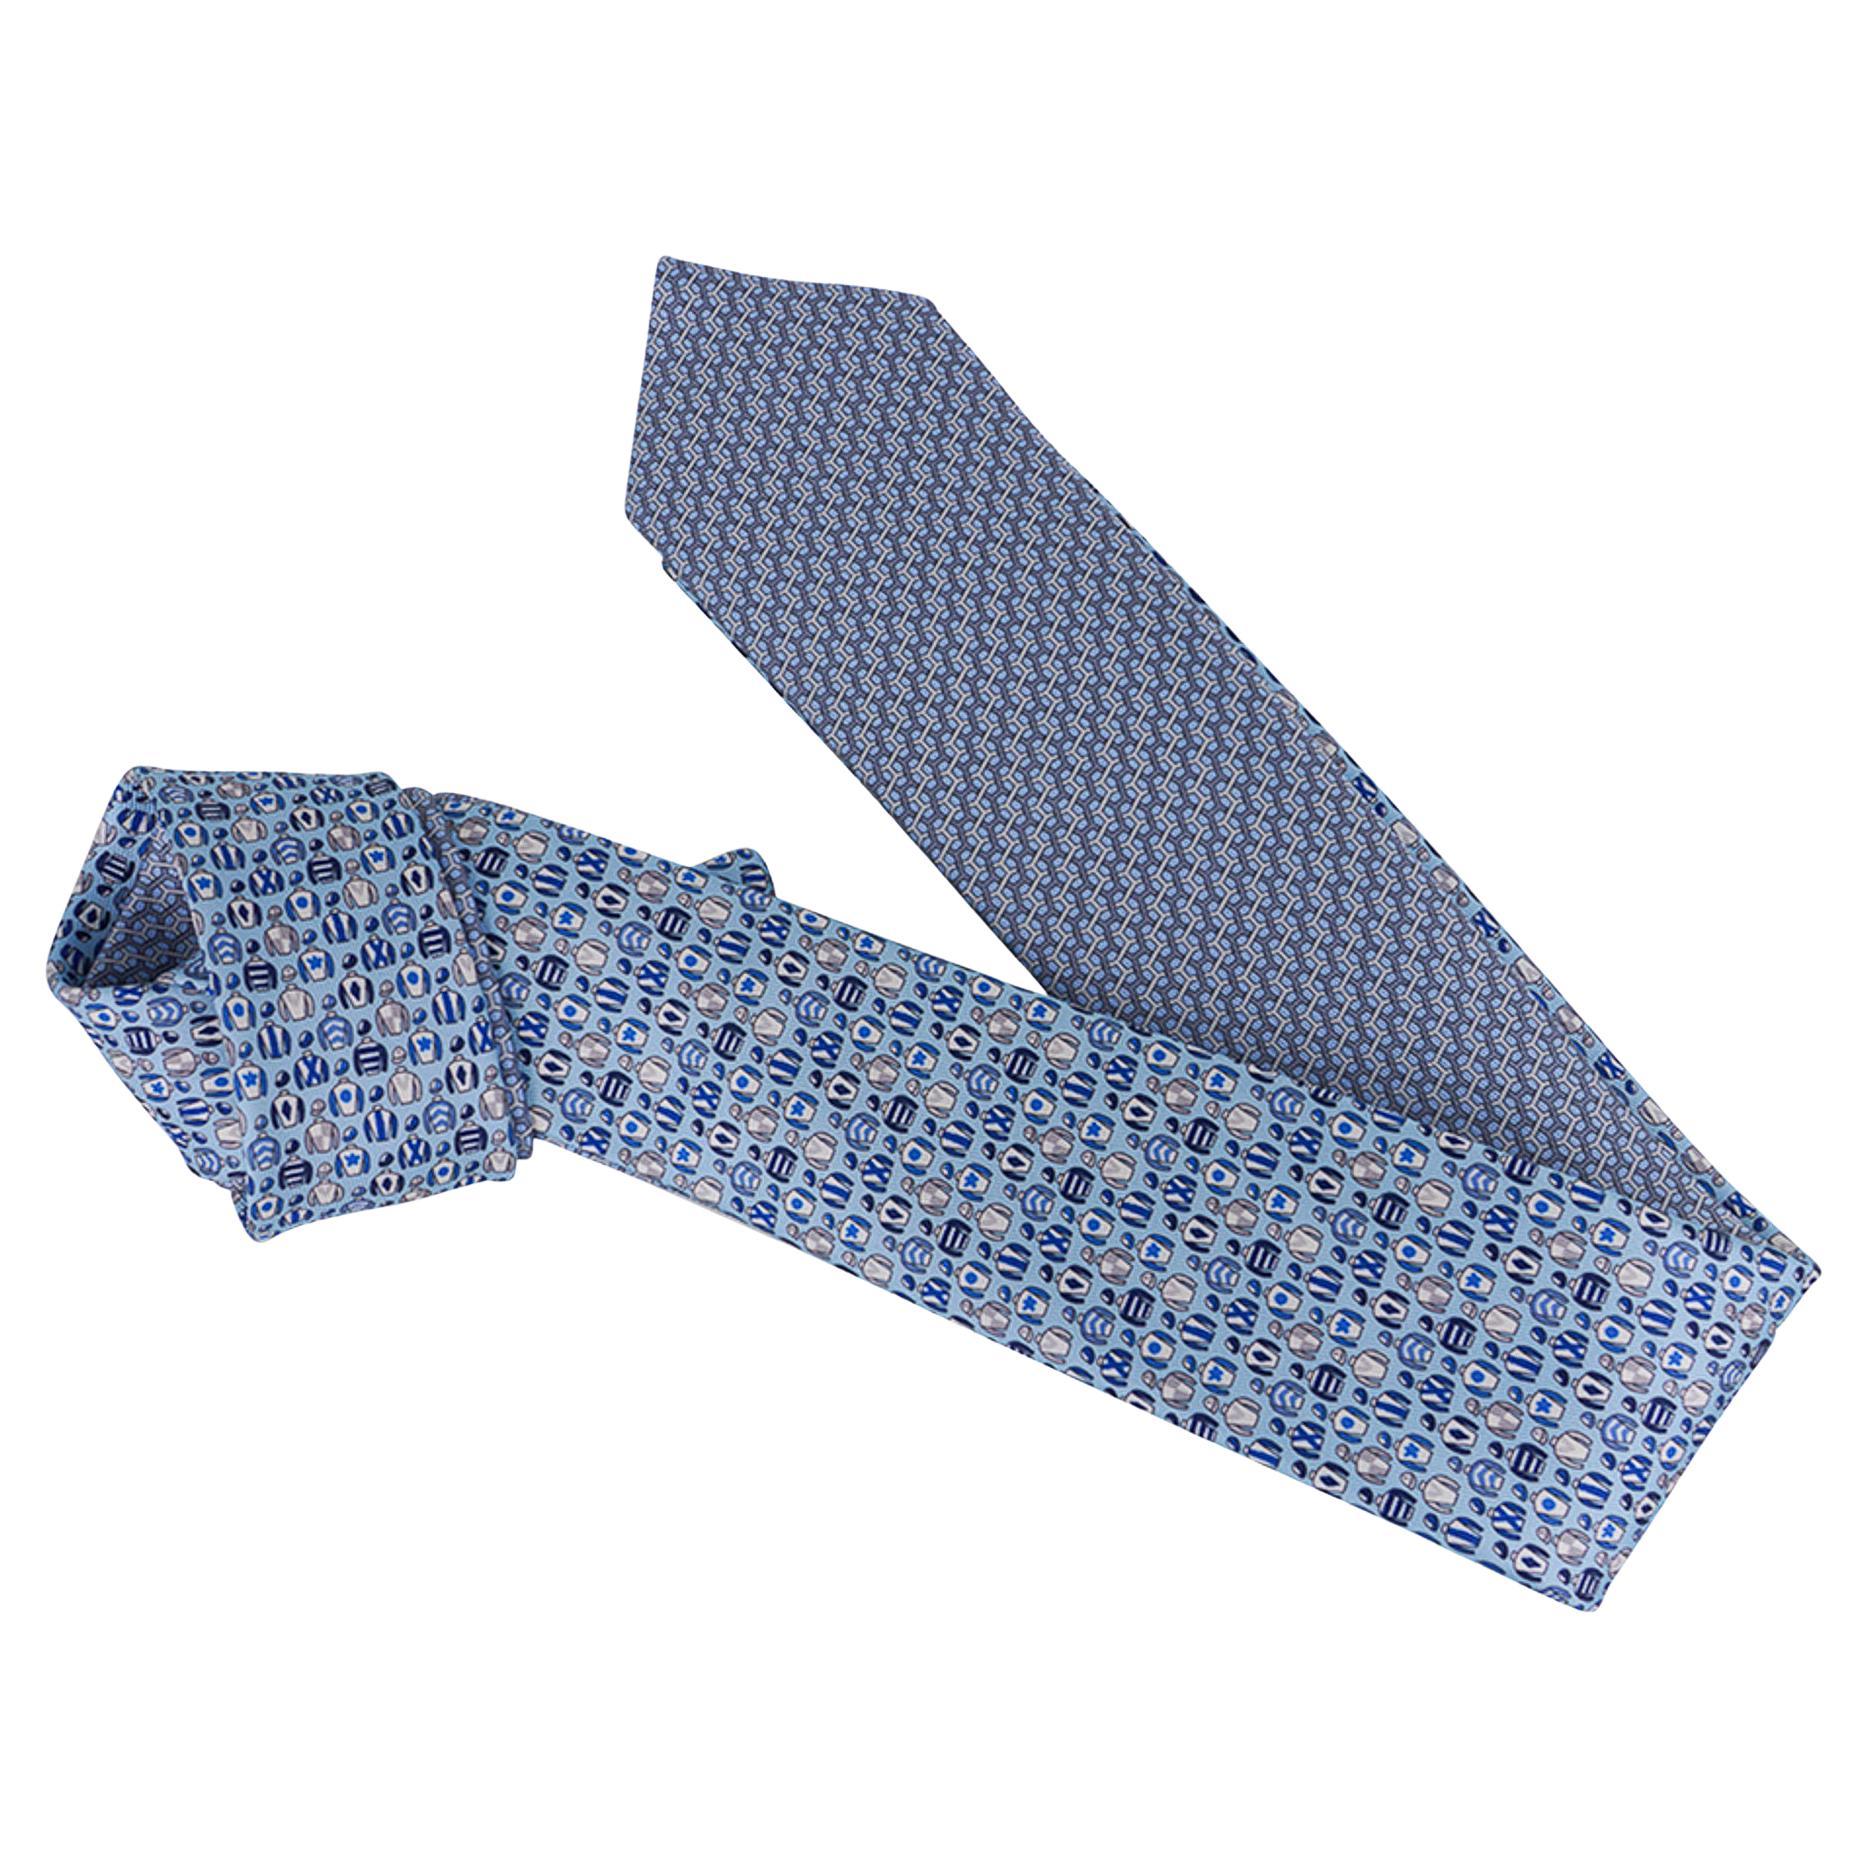 Cravate double 6 Imprimee Ciel / Marine Twillbi Hermès, neuve avec boîte